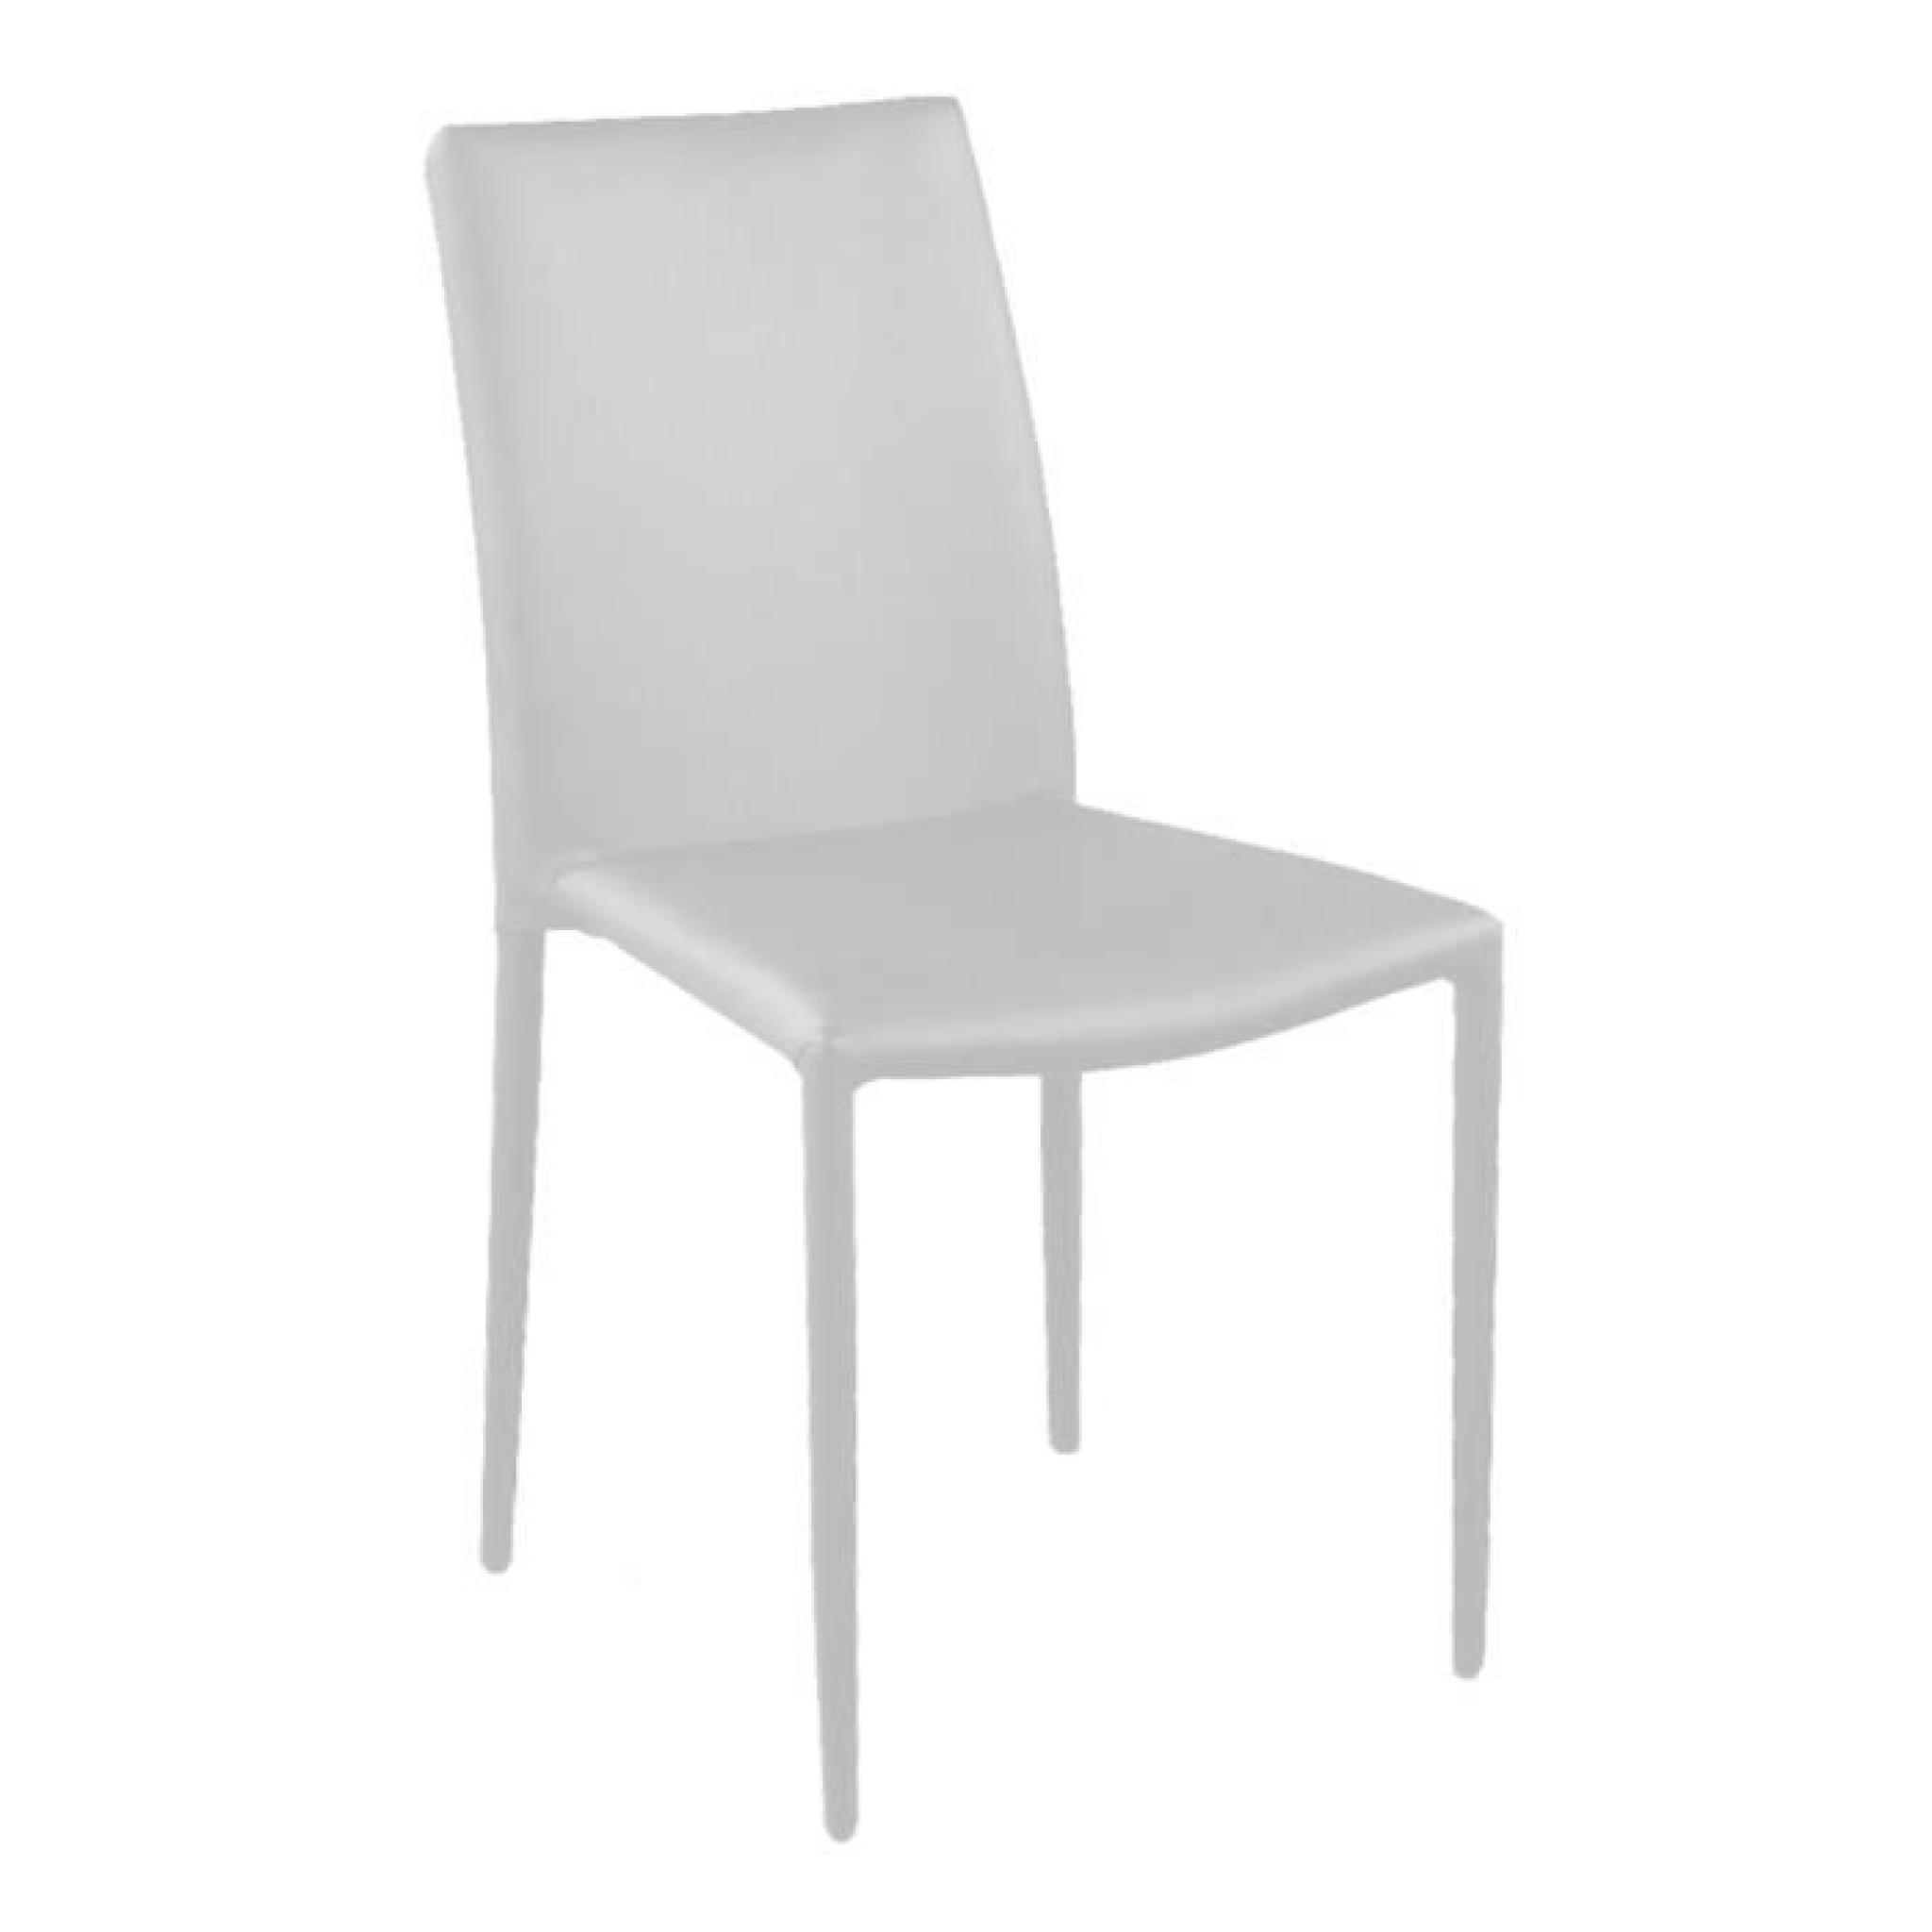 Chaise Blanc structure en PU - Dimensions : 45 …